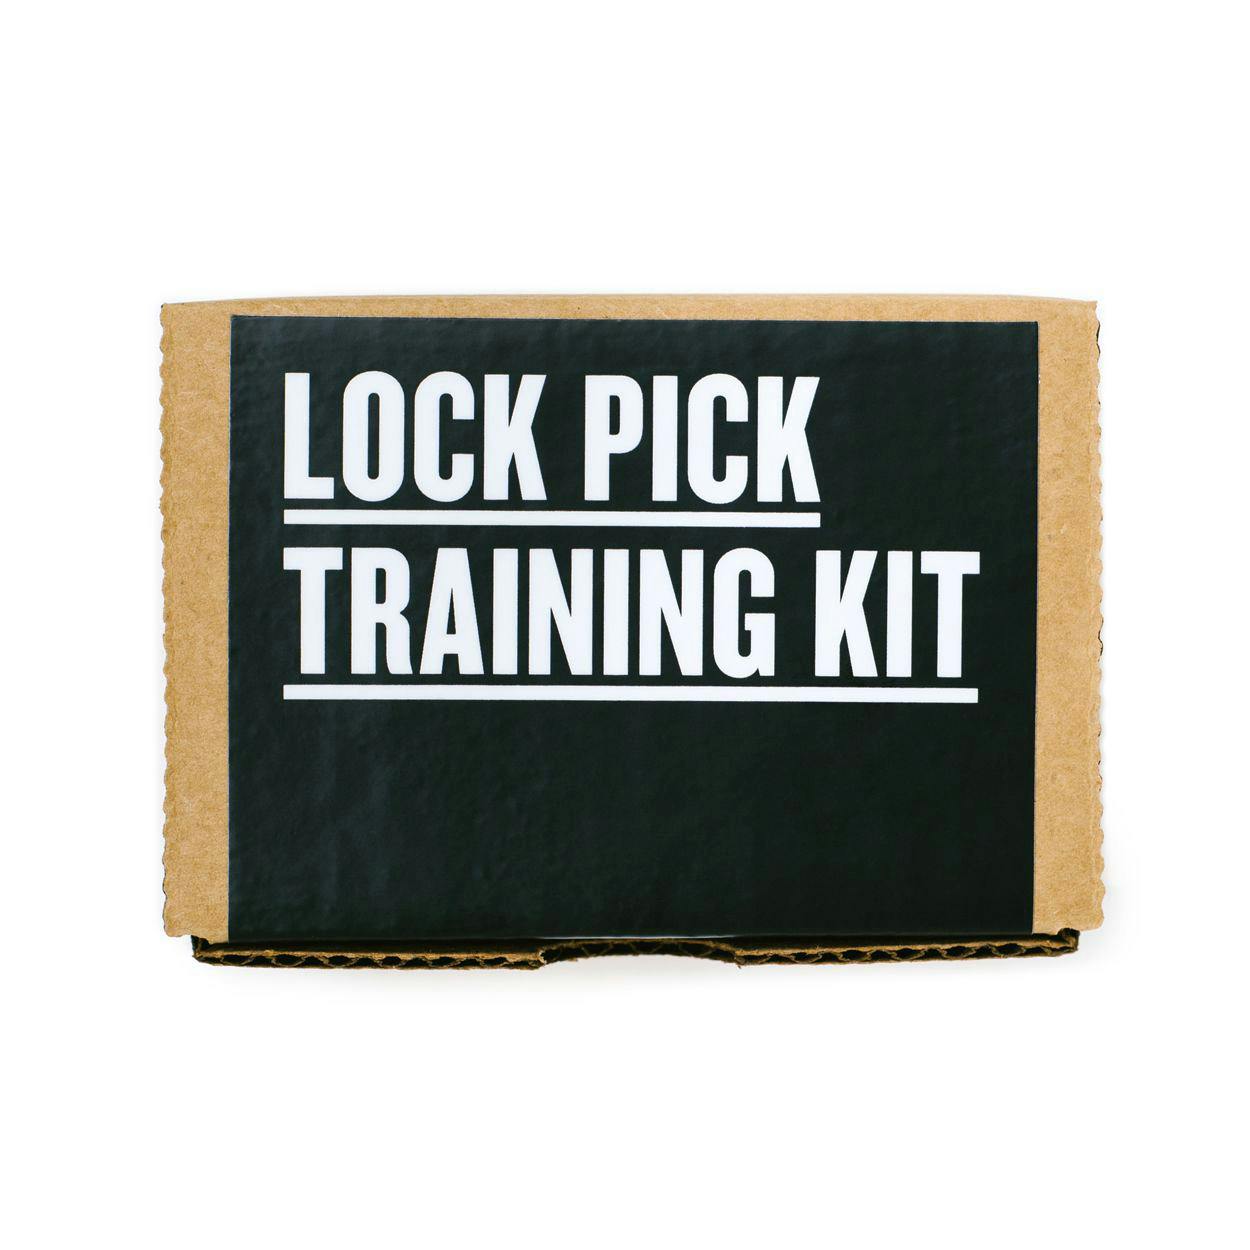 Dartboard Media Lock Pick Training Kit - Silver, Pocket Tools